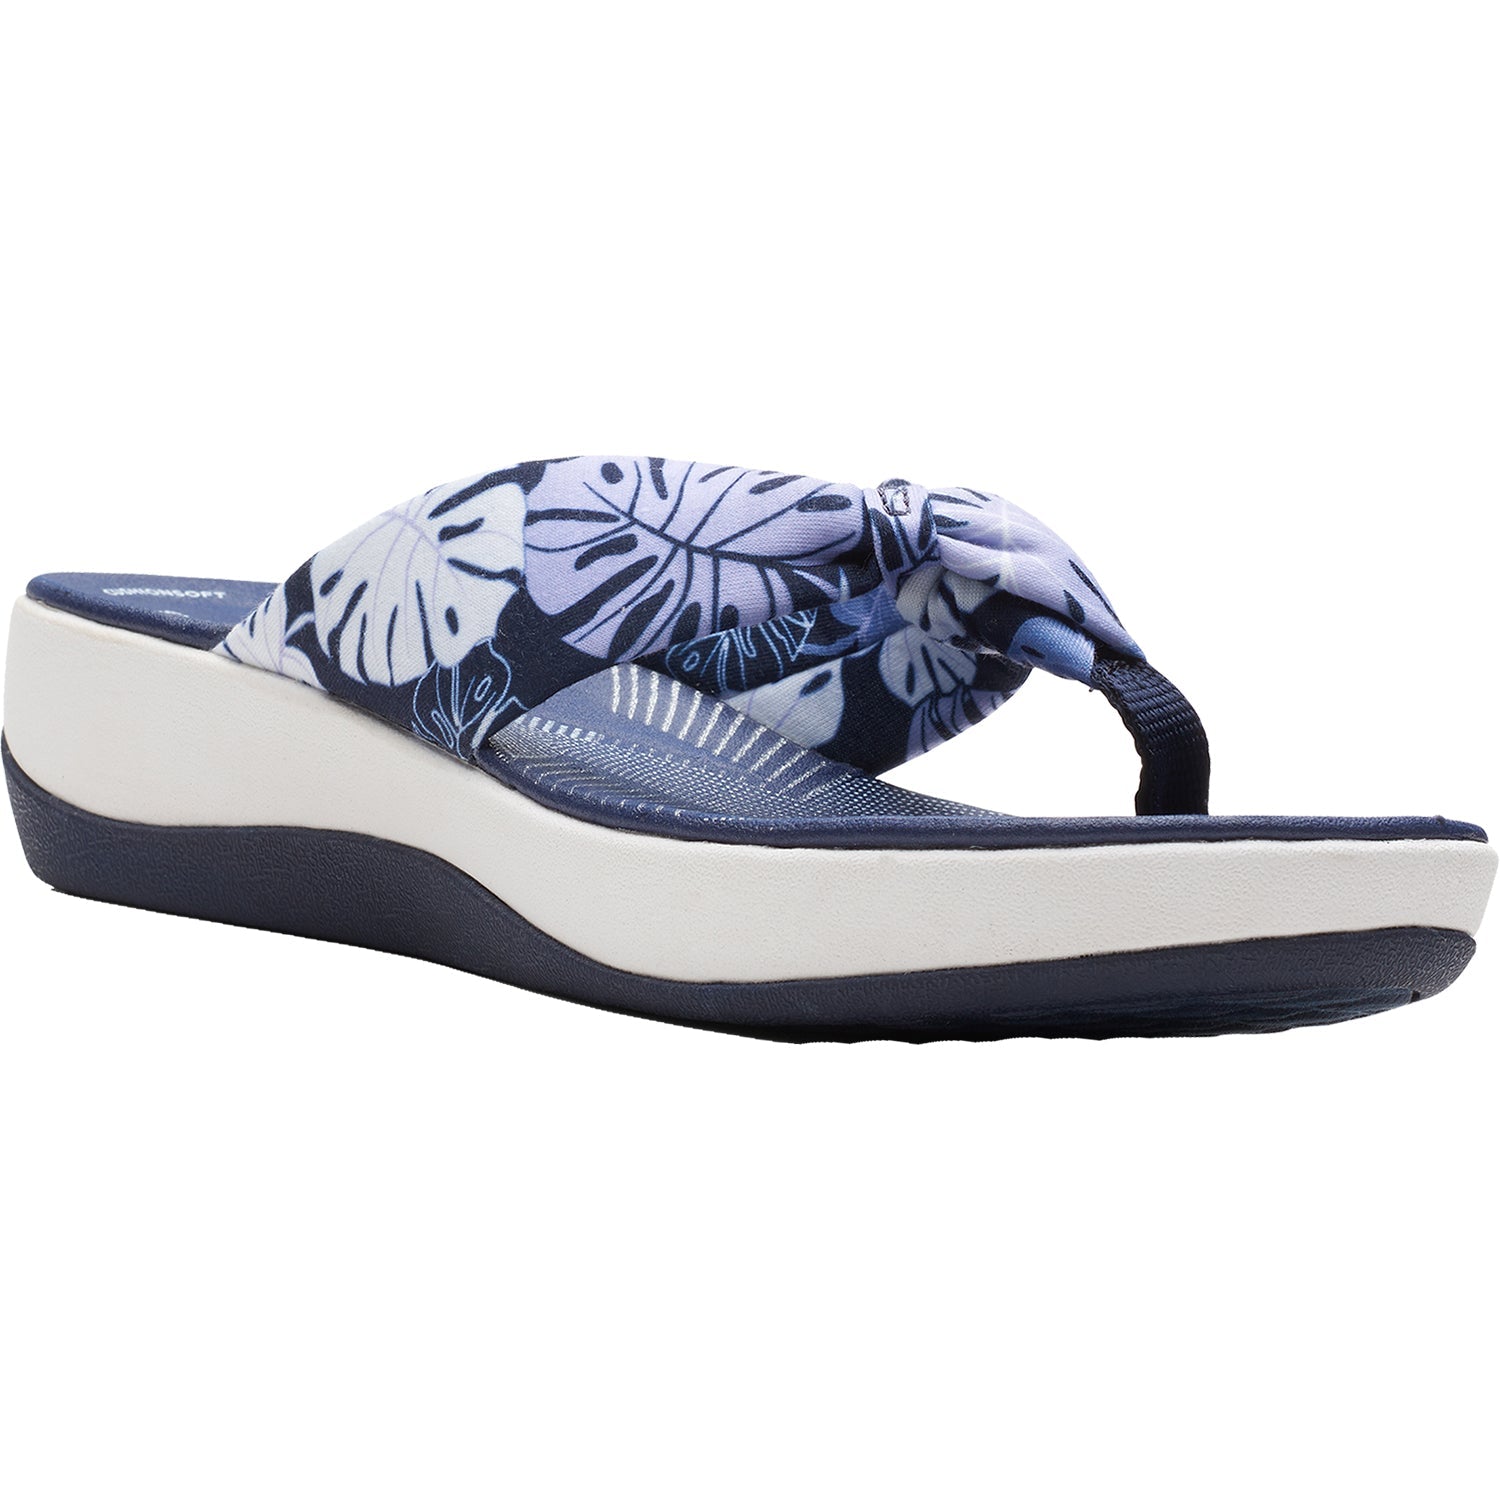 Clarks Arla Glison Blue Floral | Women's Sandals | Footwear etc.